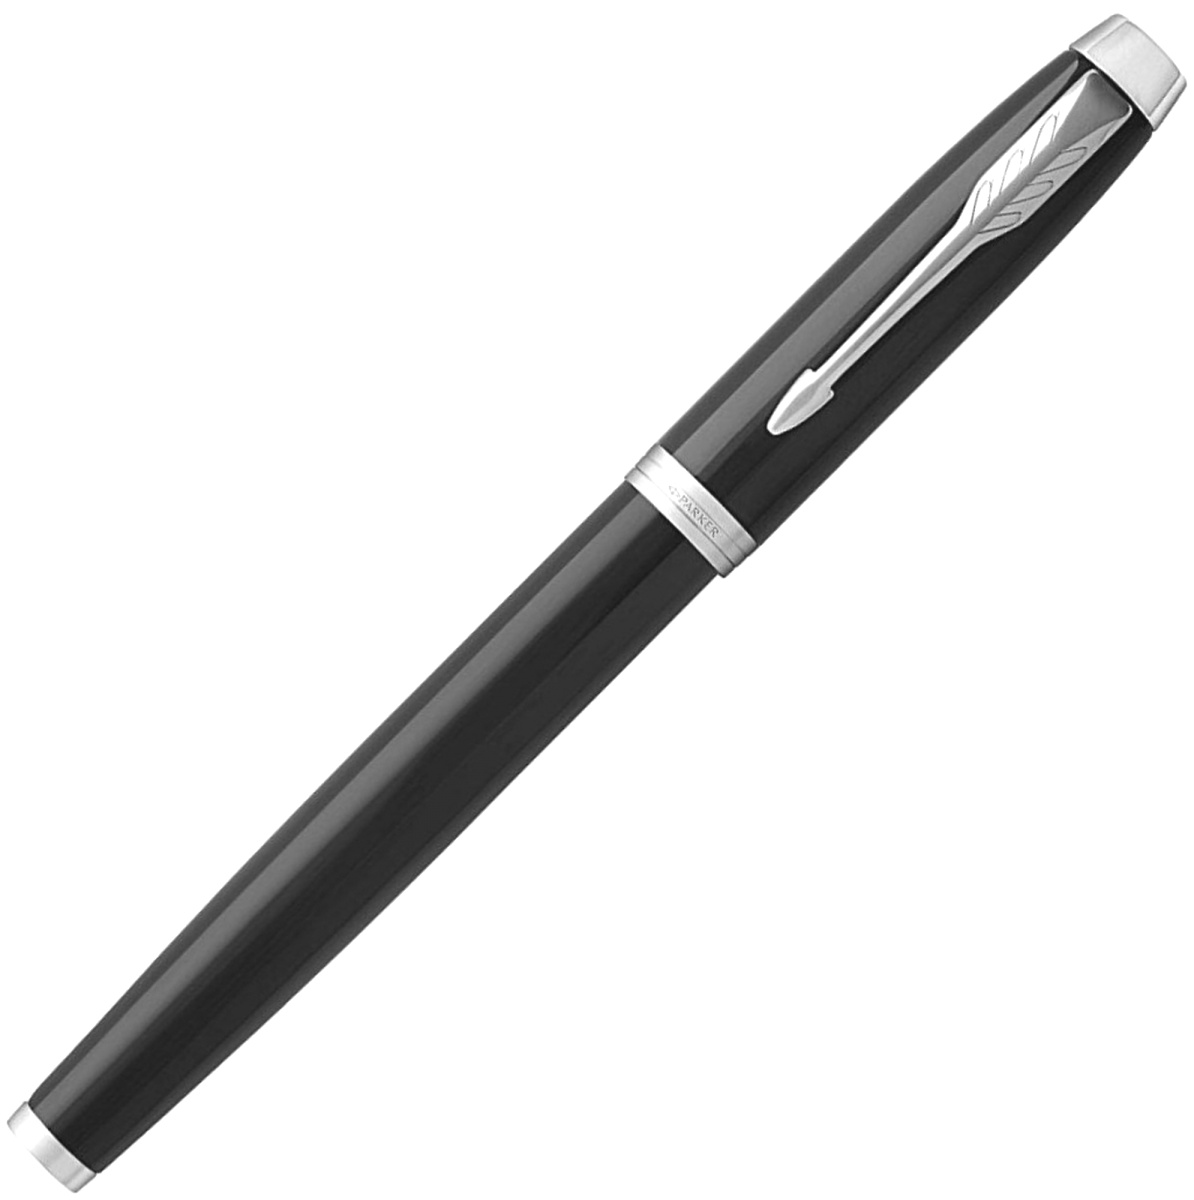  Перьевая ручка Parker IM Core F321, Black CT (Перо F), фото 2